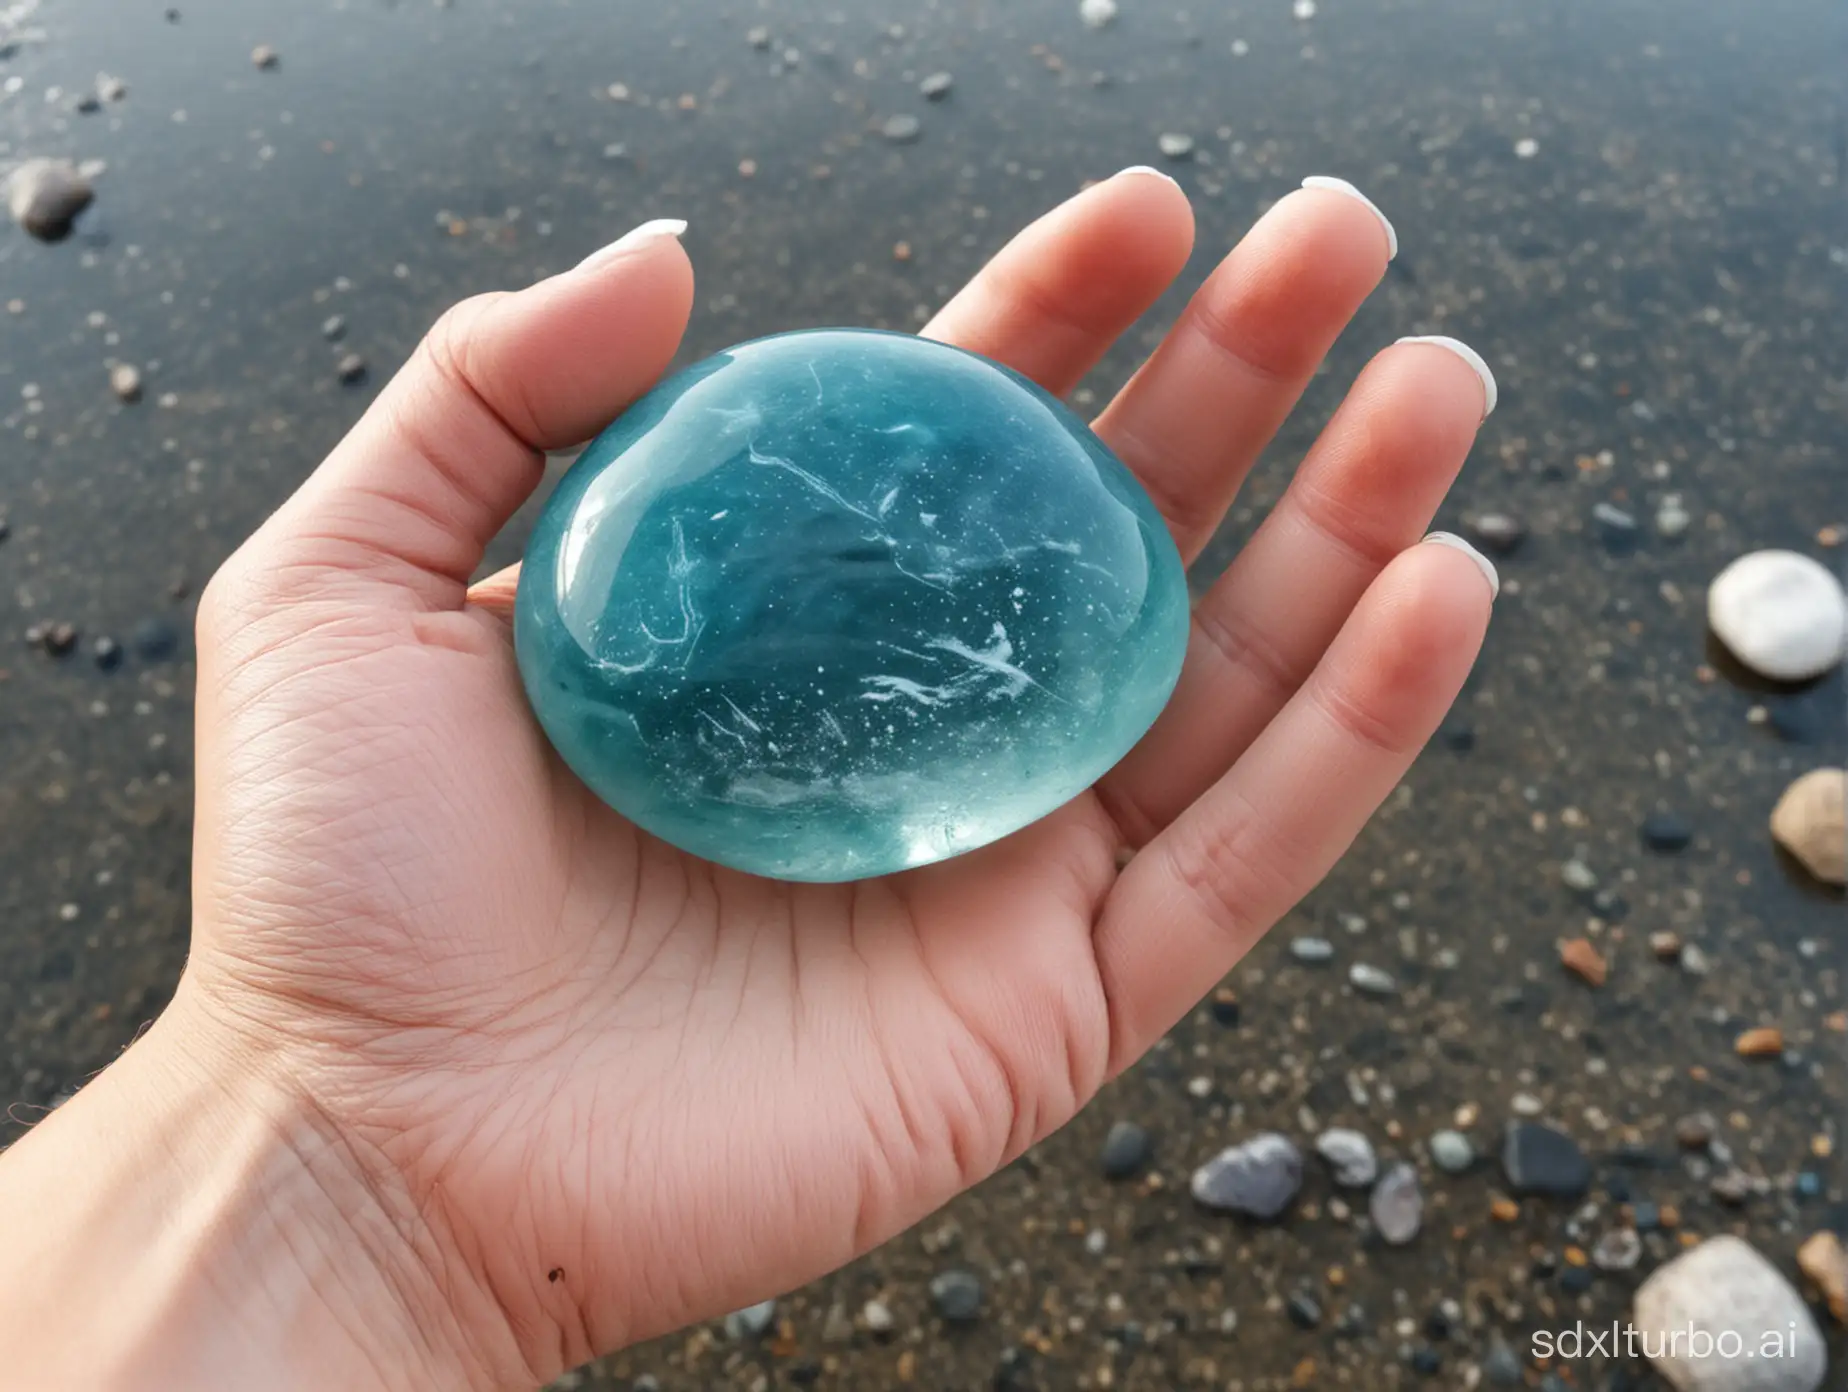 holding aquarius lucky stone in hand